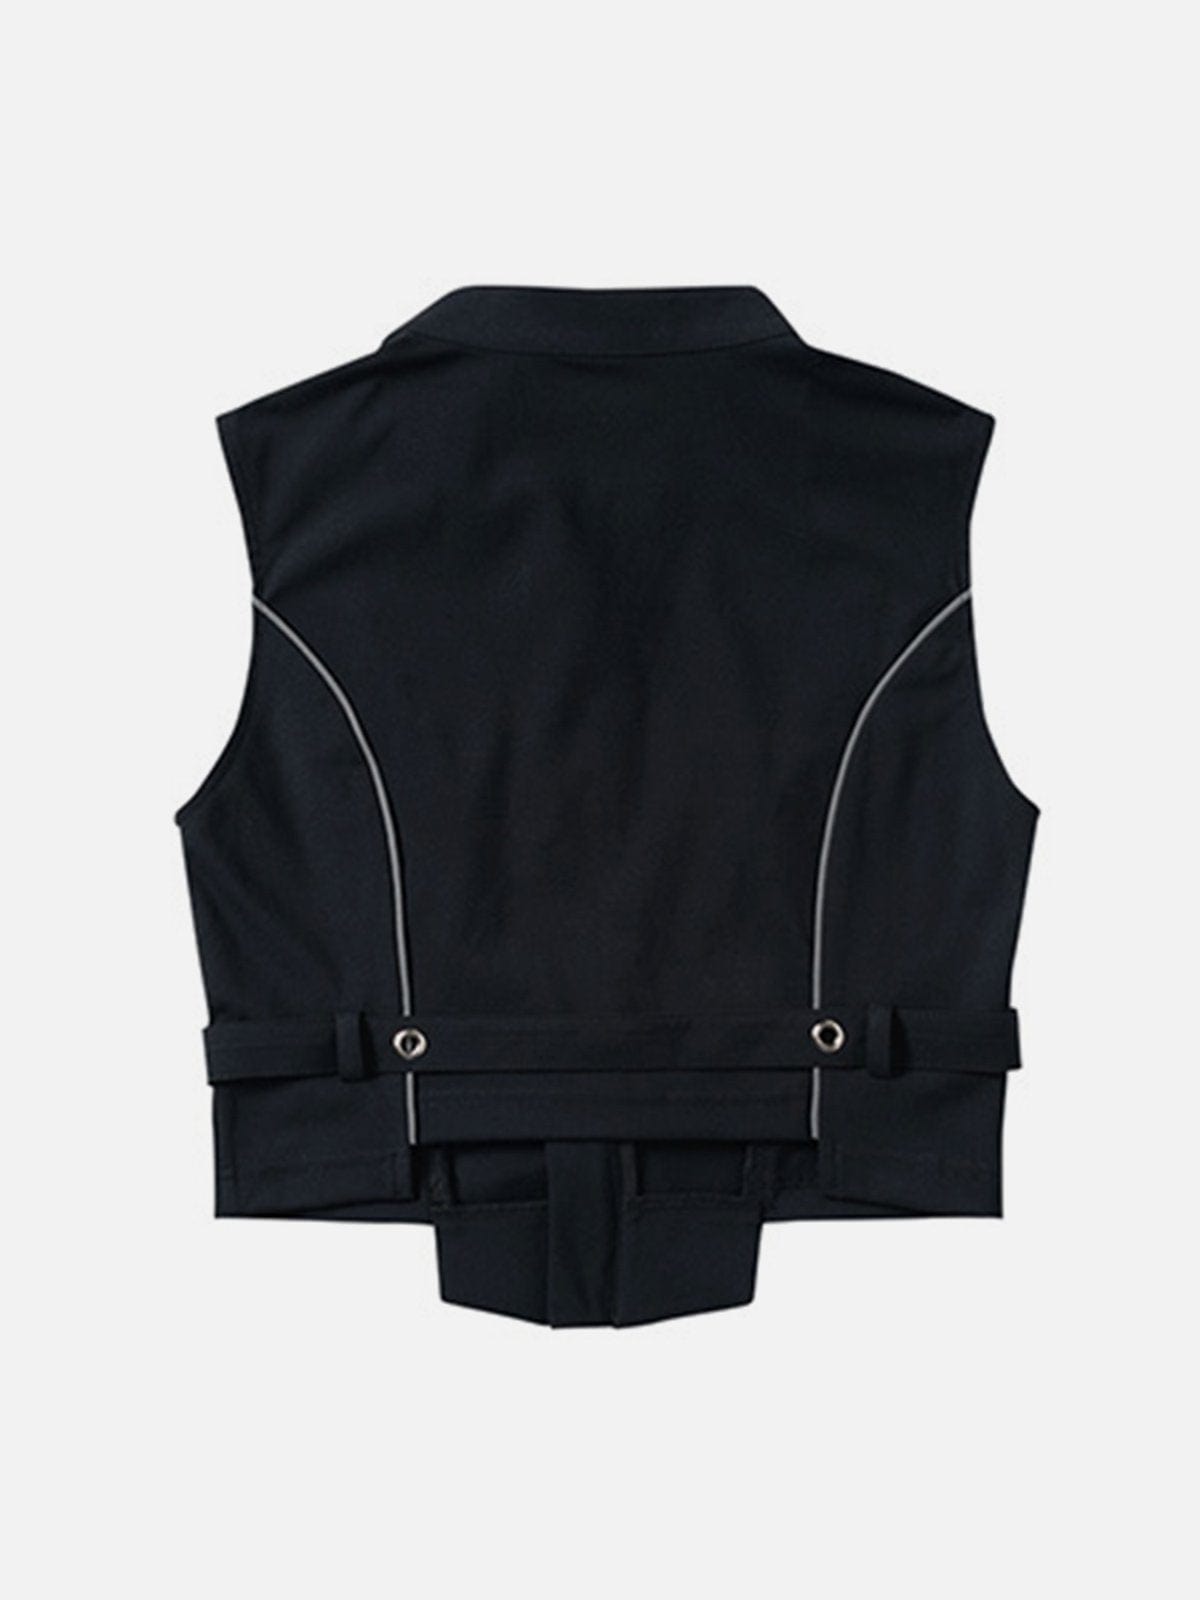 Reflective Strip Zip Up Vest Streetwear Brand Techwear Combat Tactical YUGEN THEORY